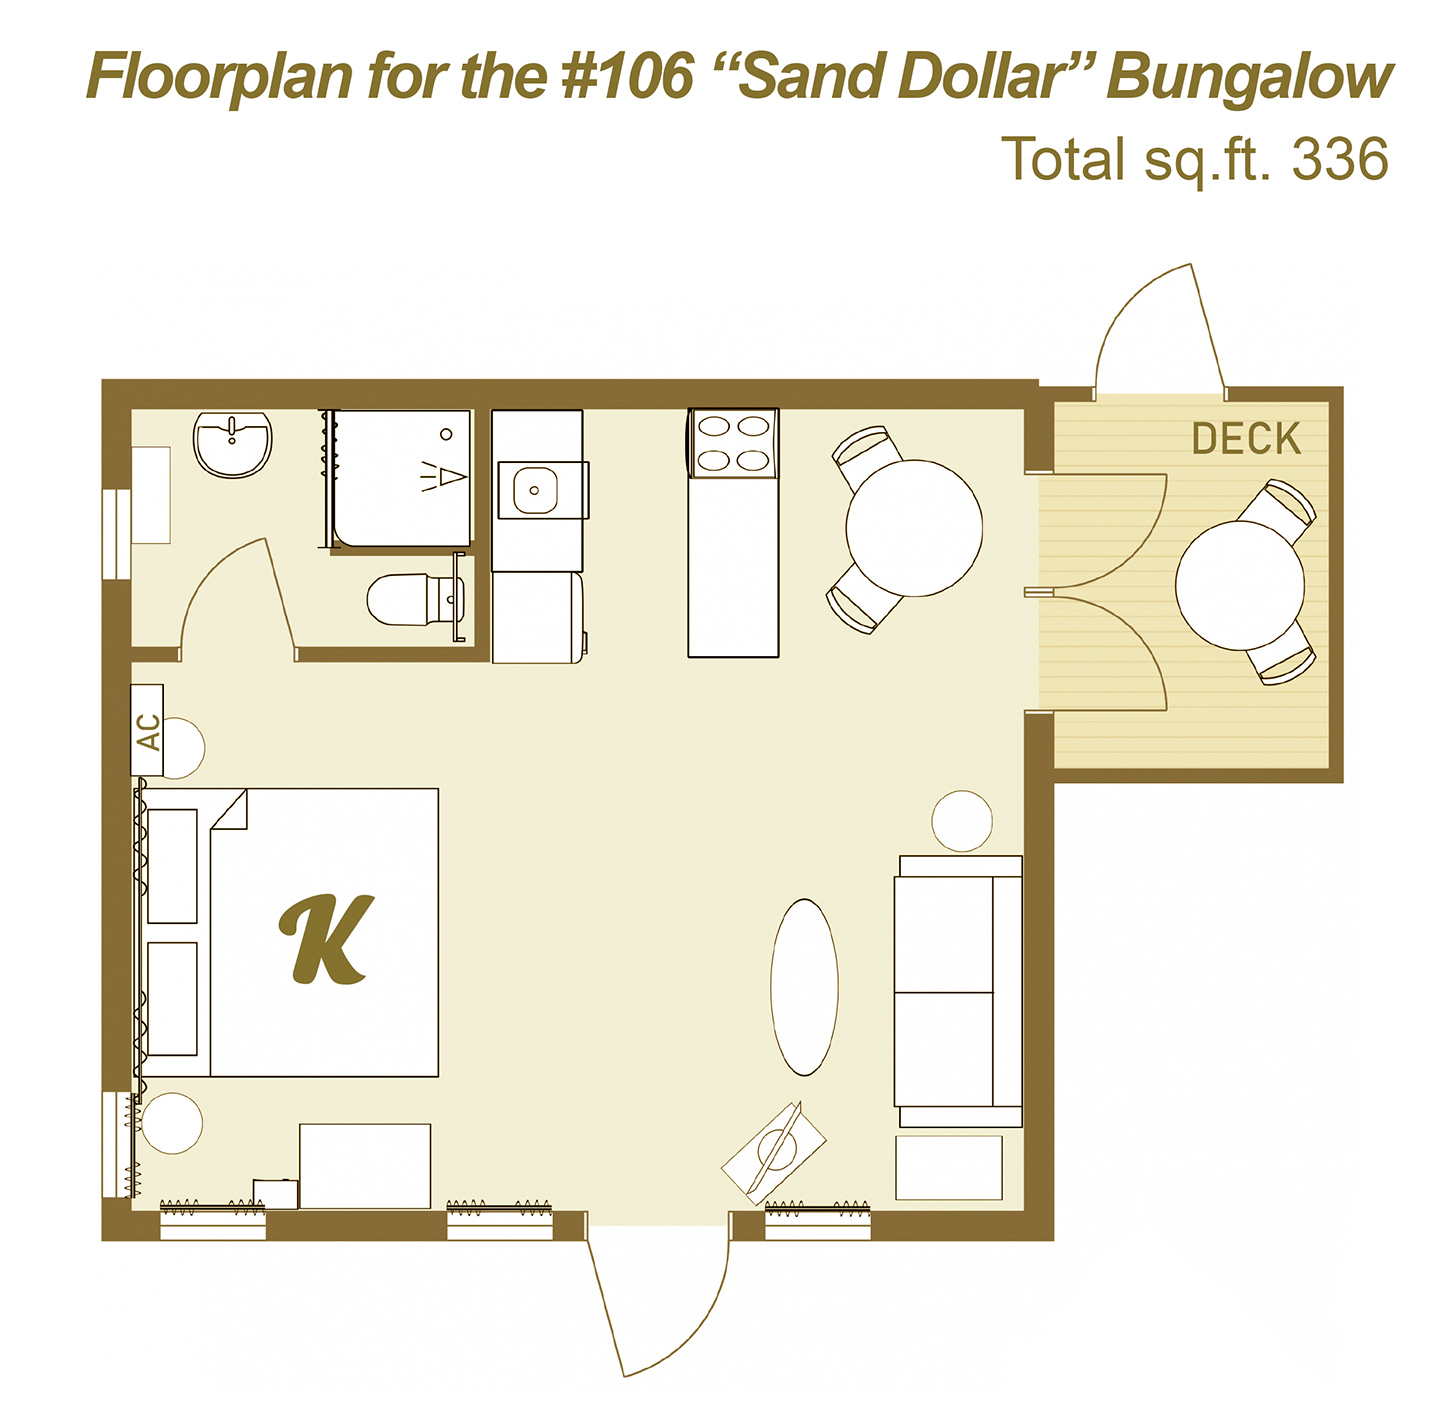 Floor plan for Sand Dollar Bungalow #106 Bungalow